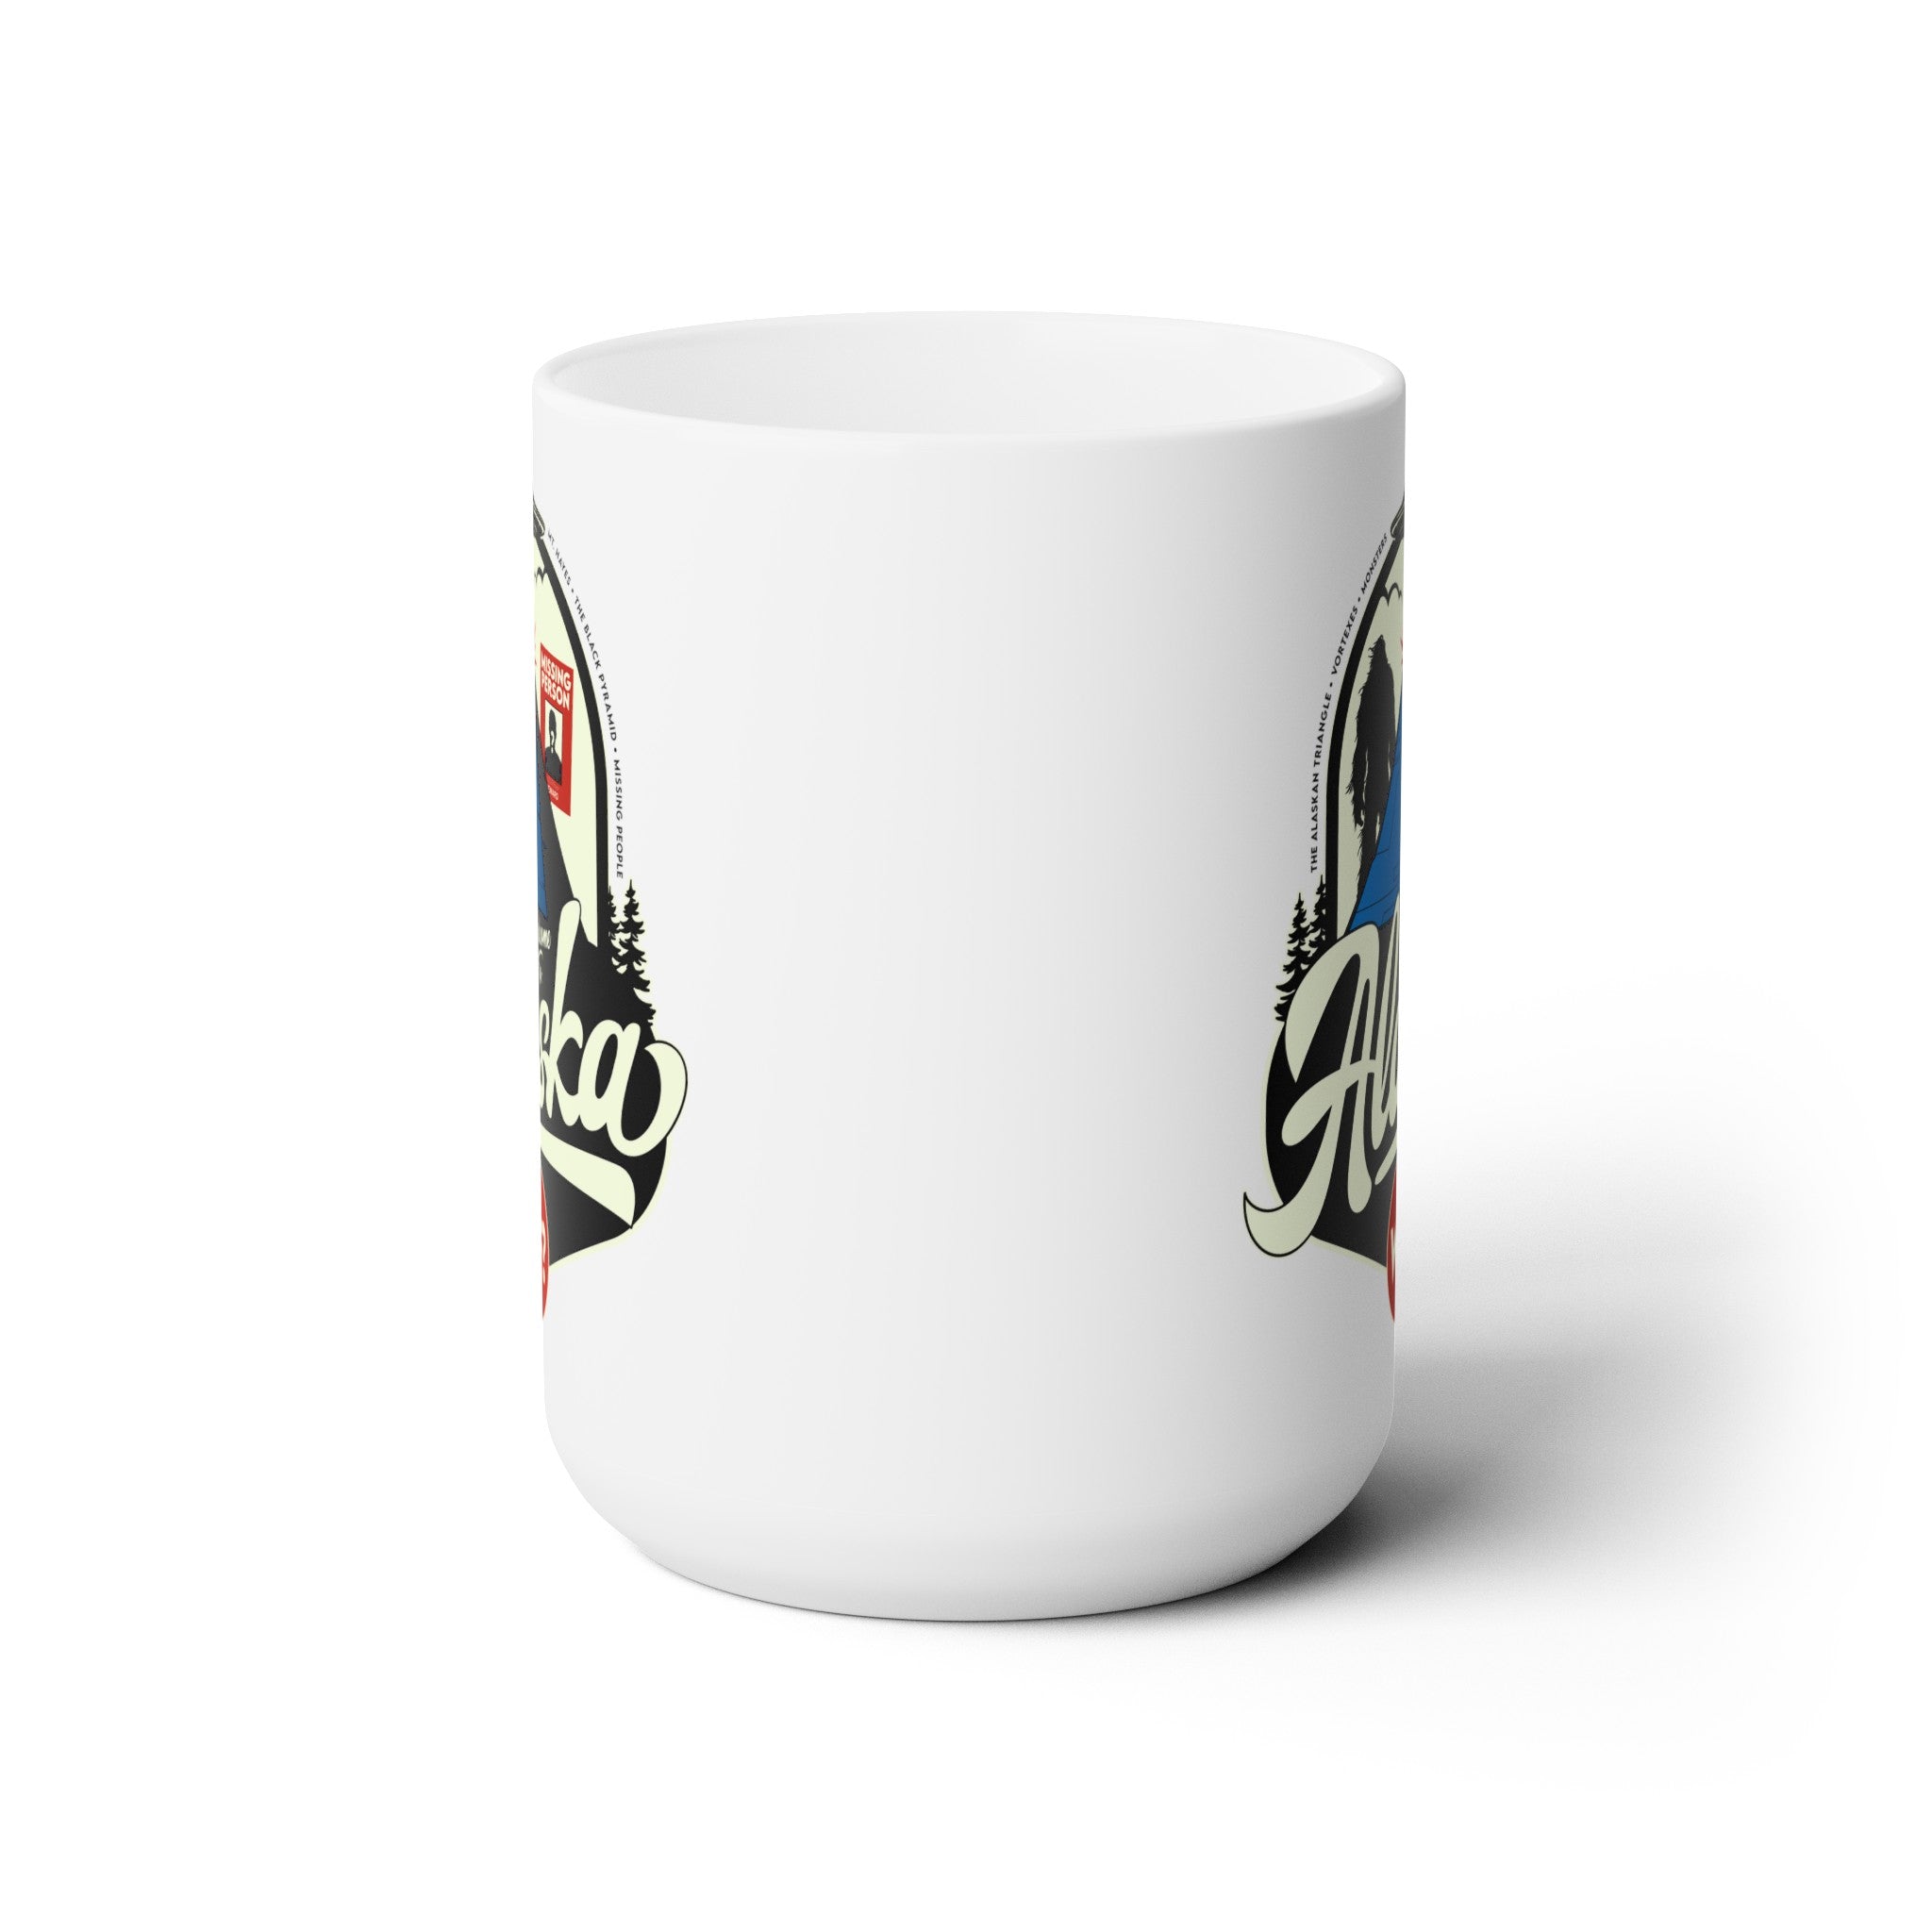 5/4 Alaska Pyramid Ceramic Mug 15oz - 0